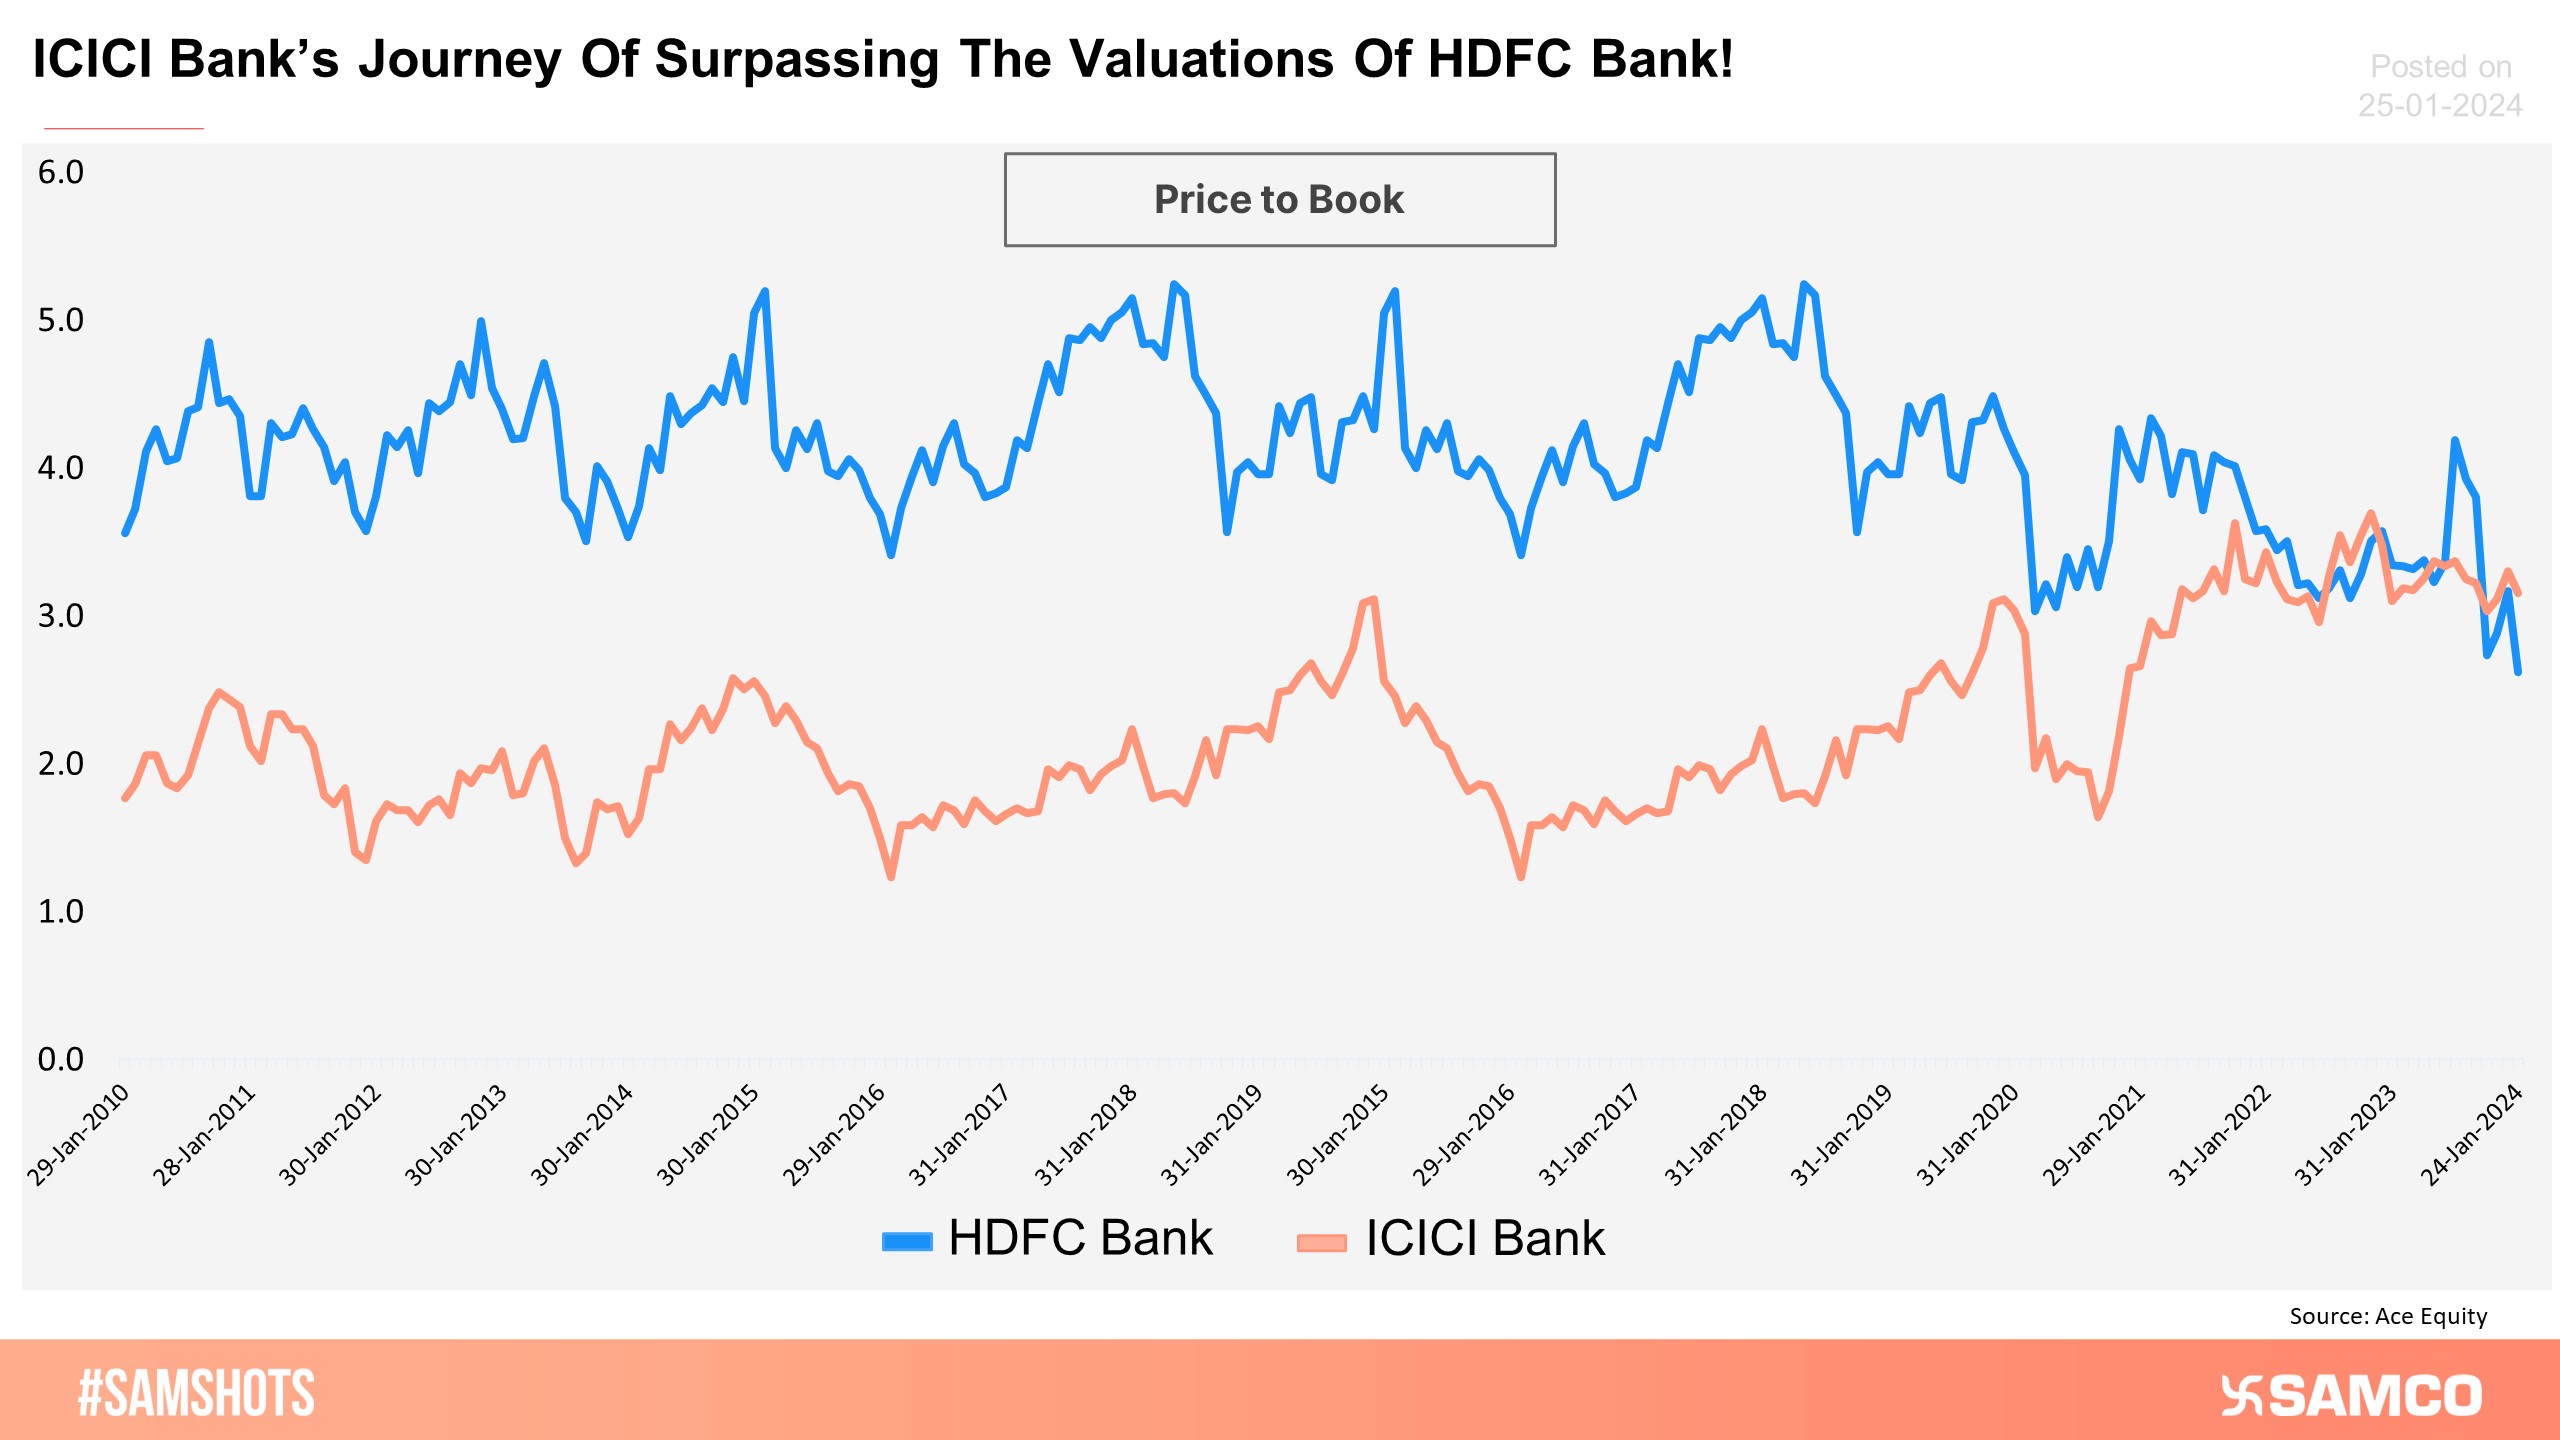 ICICI Bank Vs HDFC Bank Valuation Trajectory!